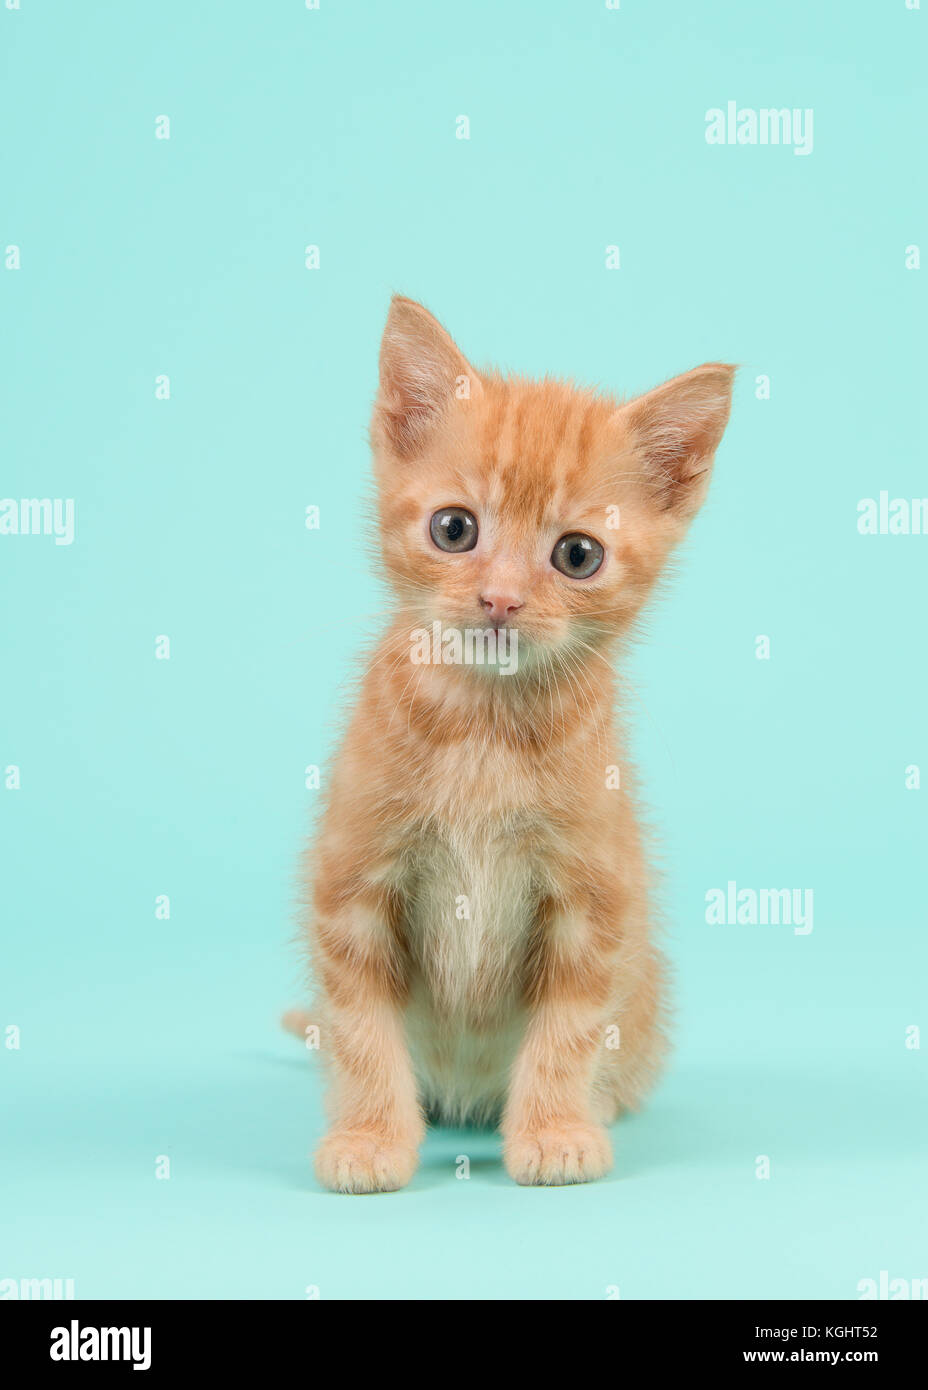 Red ginger 8 semaines baby cat sur un fond bleu turquoise Banque D'Images